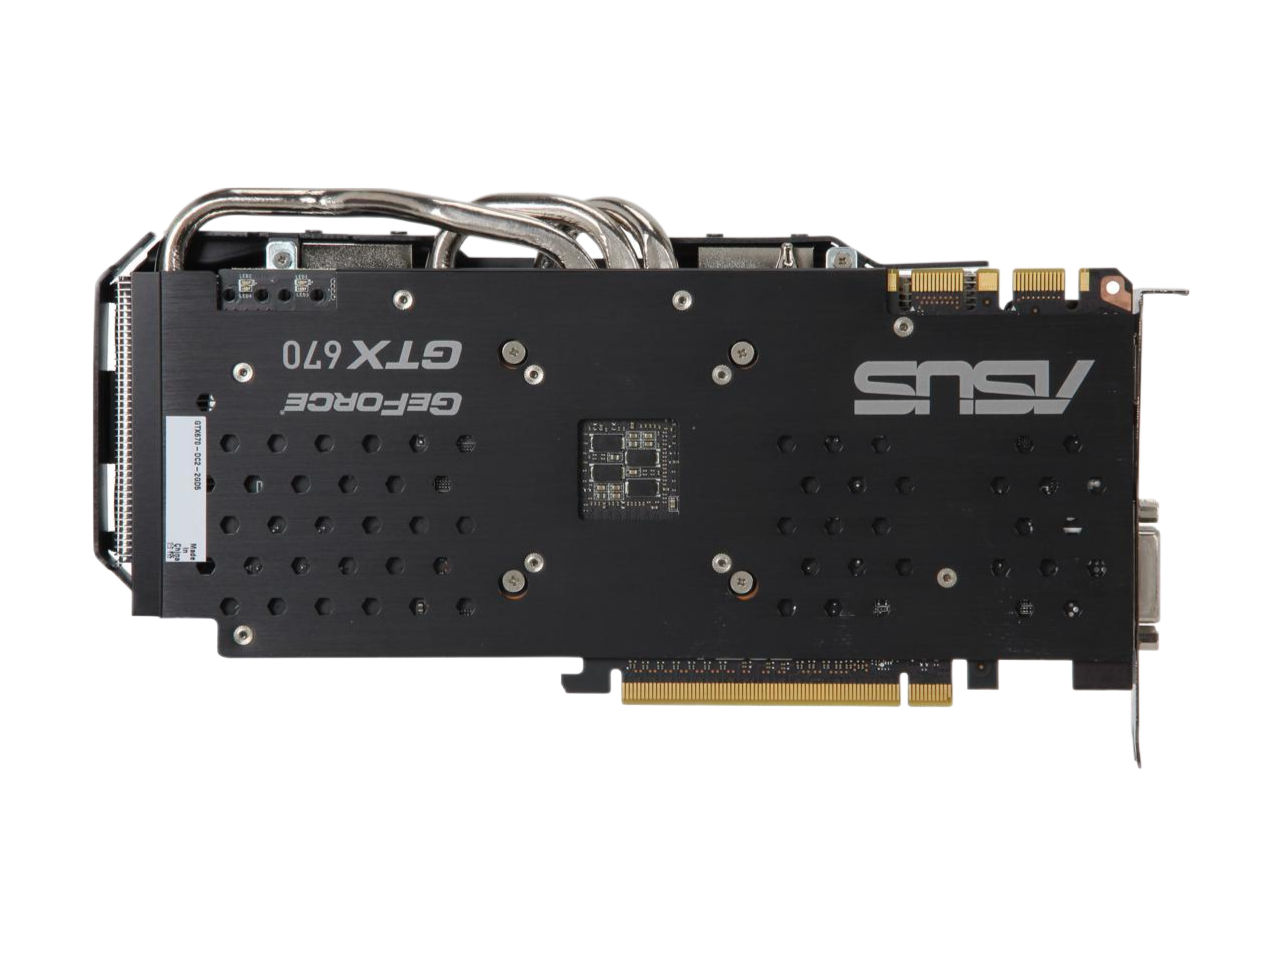 ASUS GeForce GTX 670 2GB GDDR5 PCI Express 3.0 x16 SLI Support Video Card GTX670-DC2-2GD5